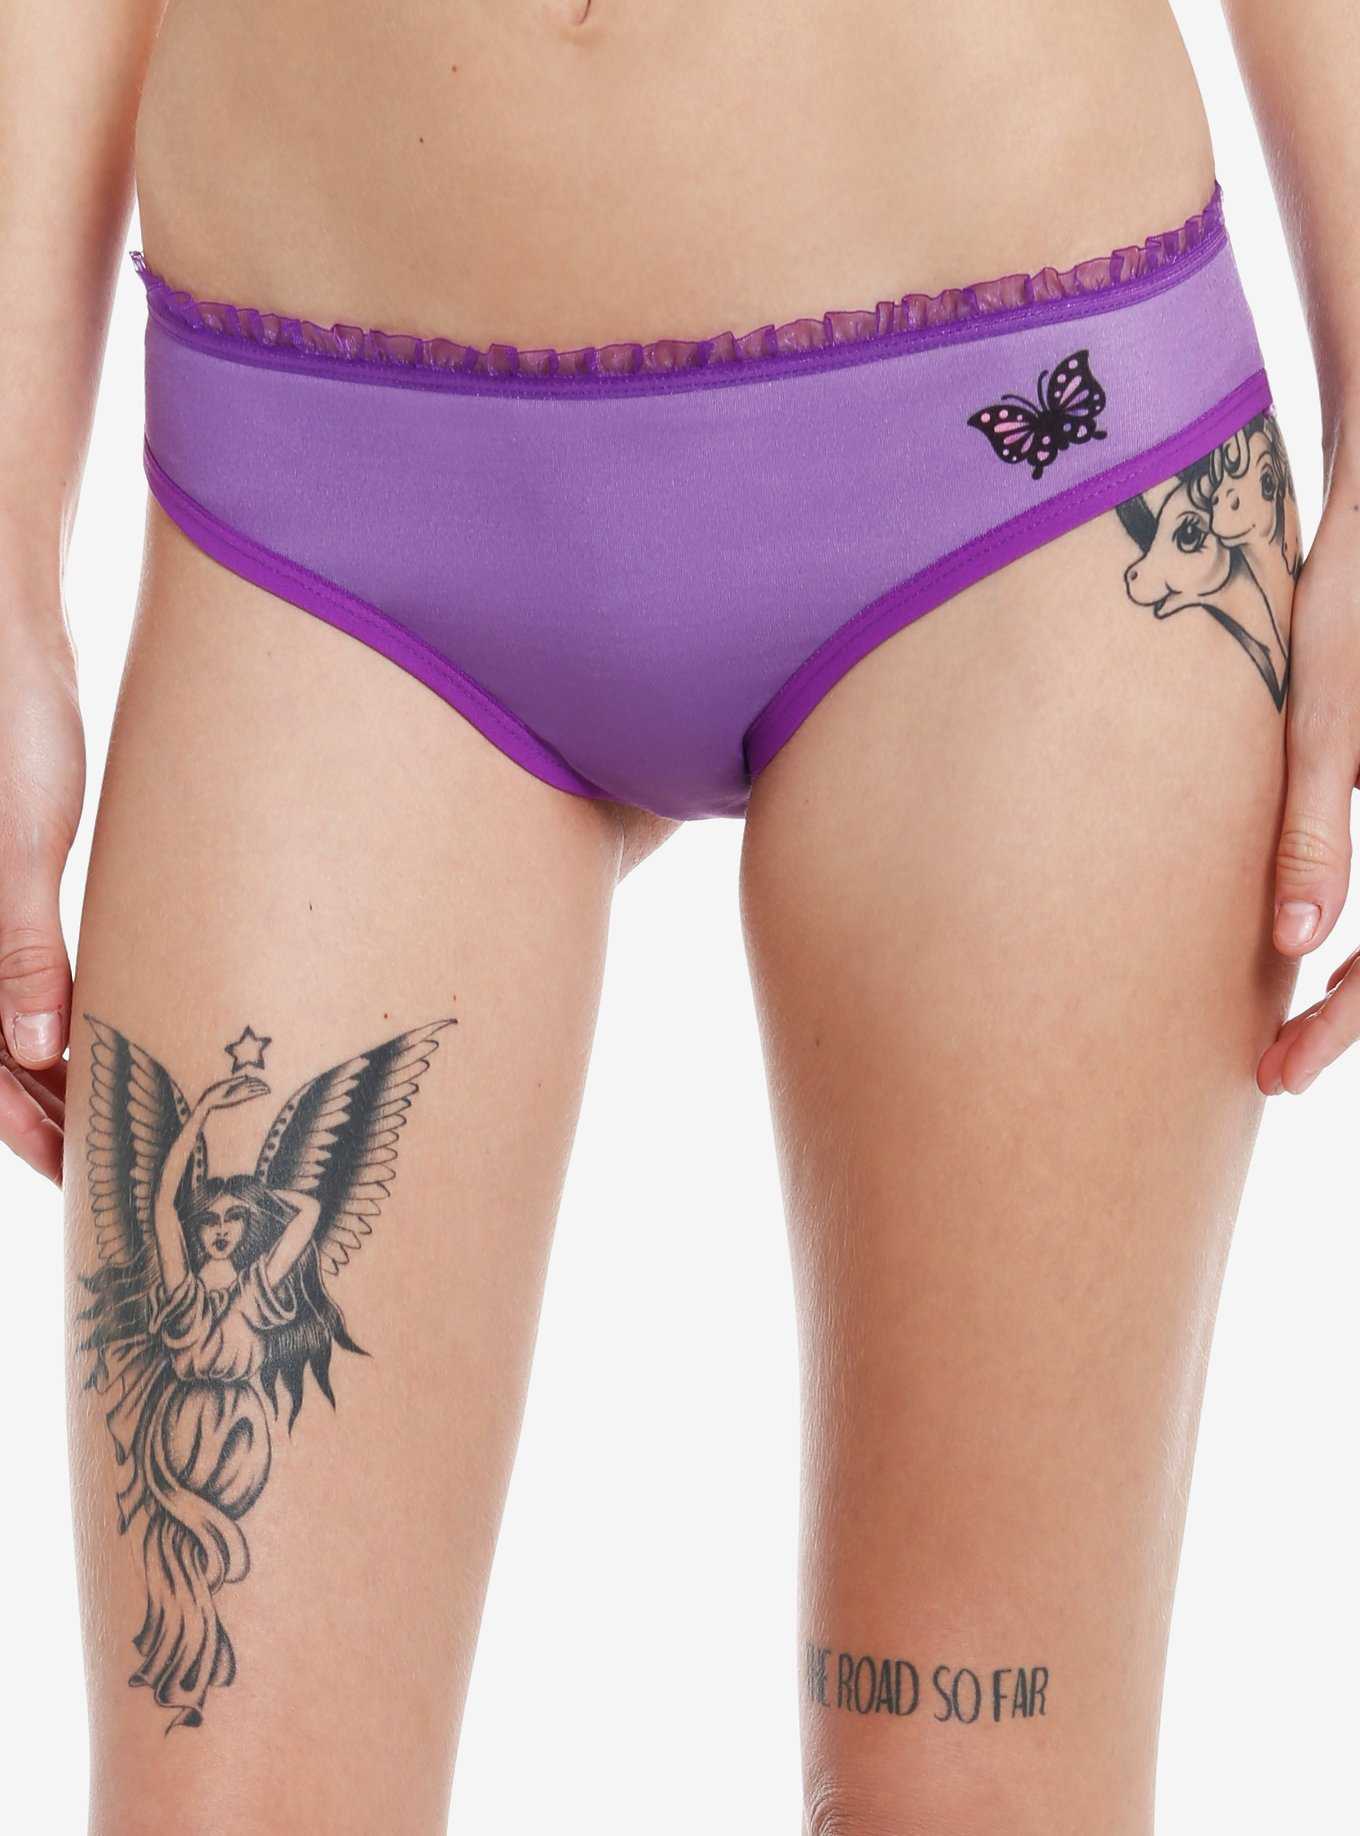 HELLO KITTY WOMENS Panties SEXY THONG Underwear Panty Naughty